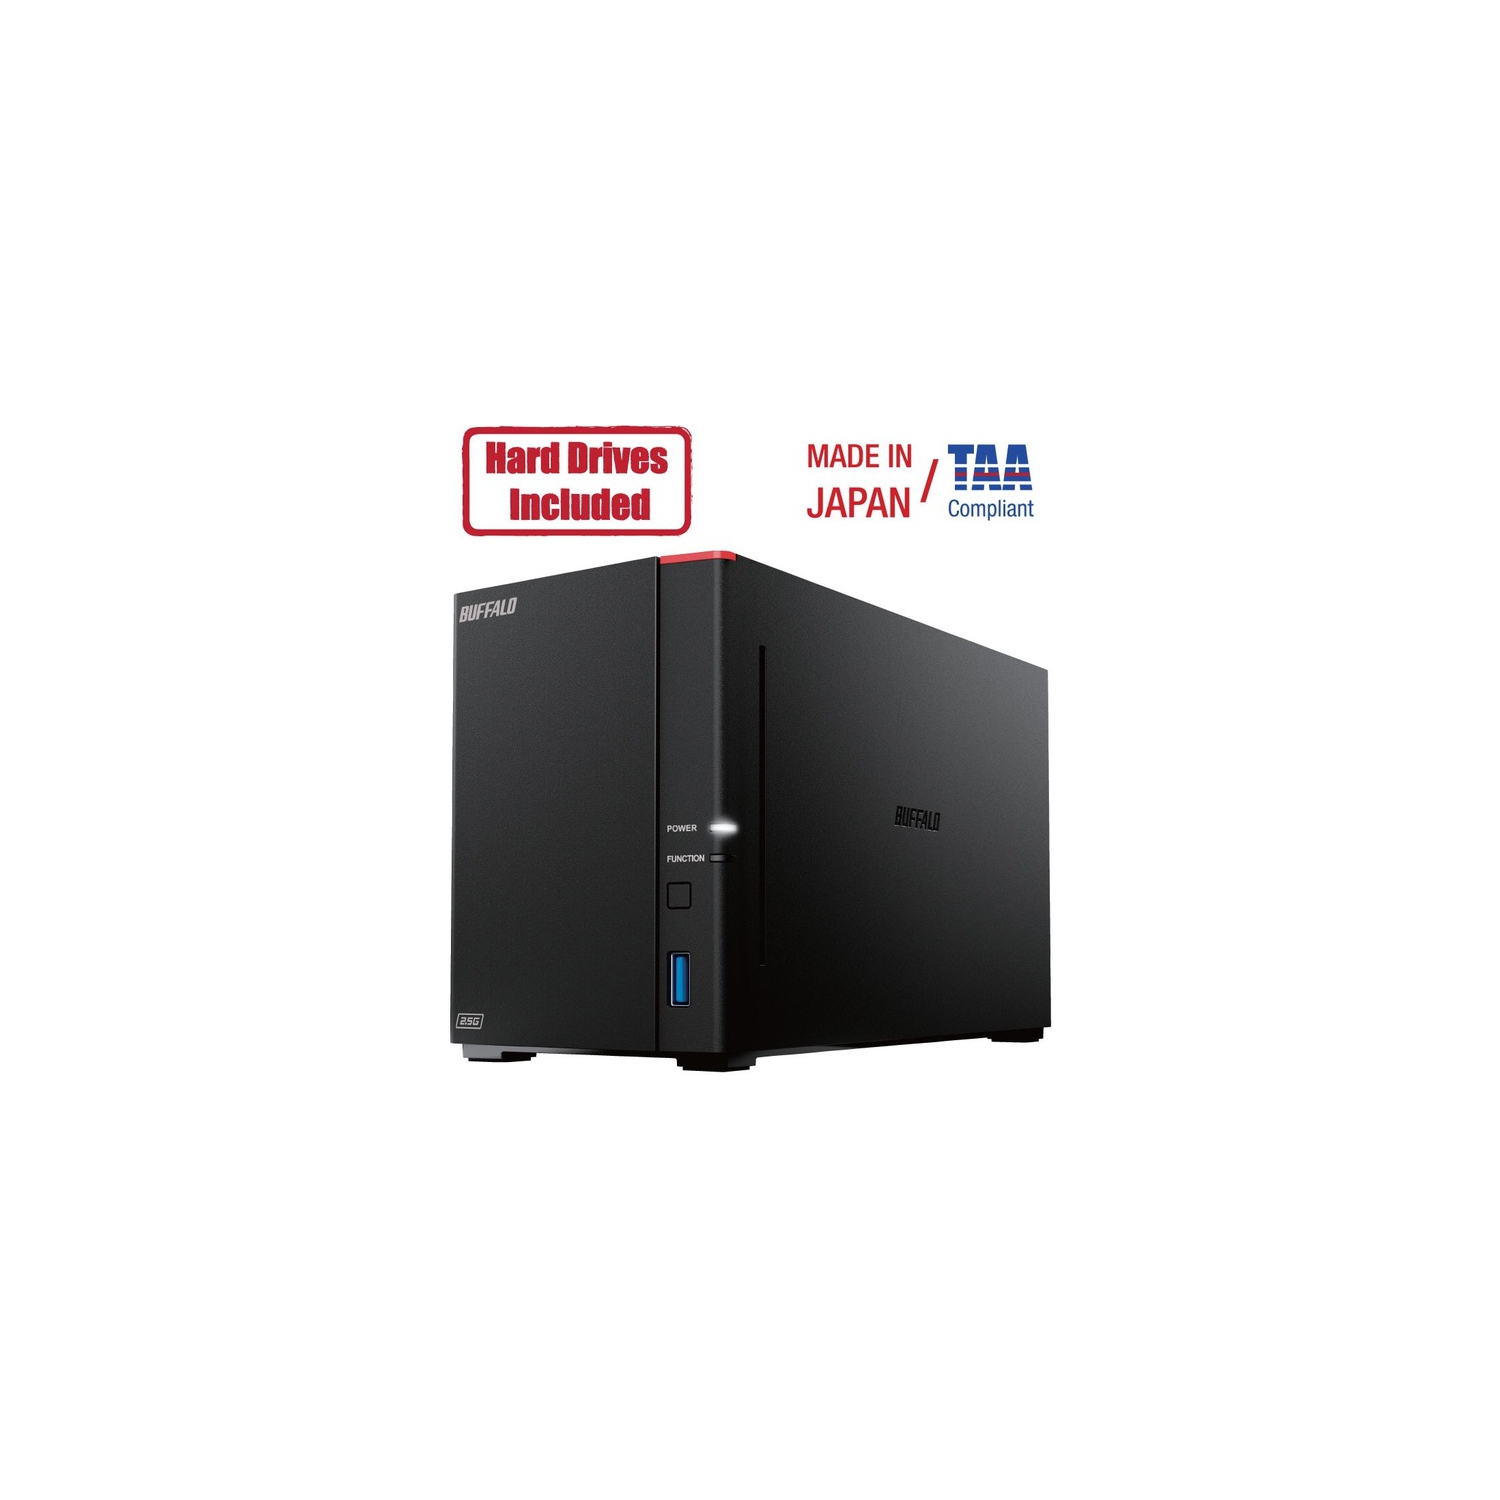 Buffalo LinkStation 720D 16TB Personal Cloud Storage Hard Drives Included (2 x 8TB, 2 Bay)